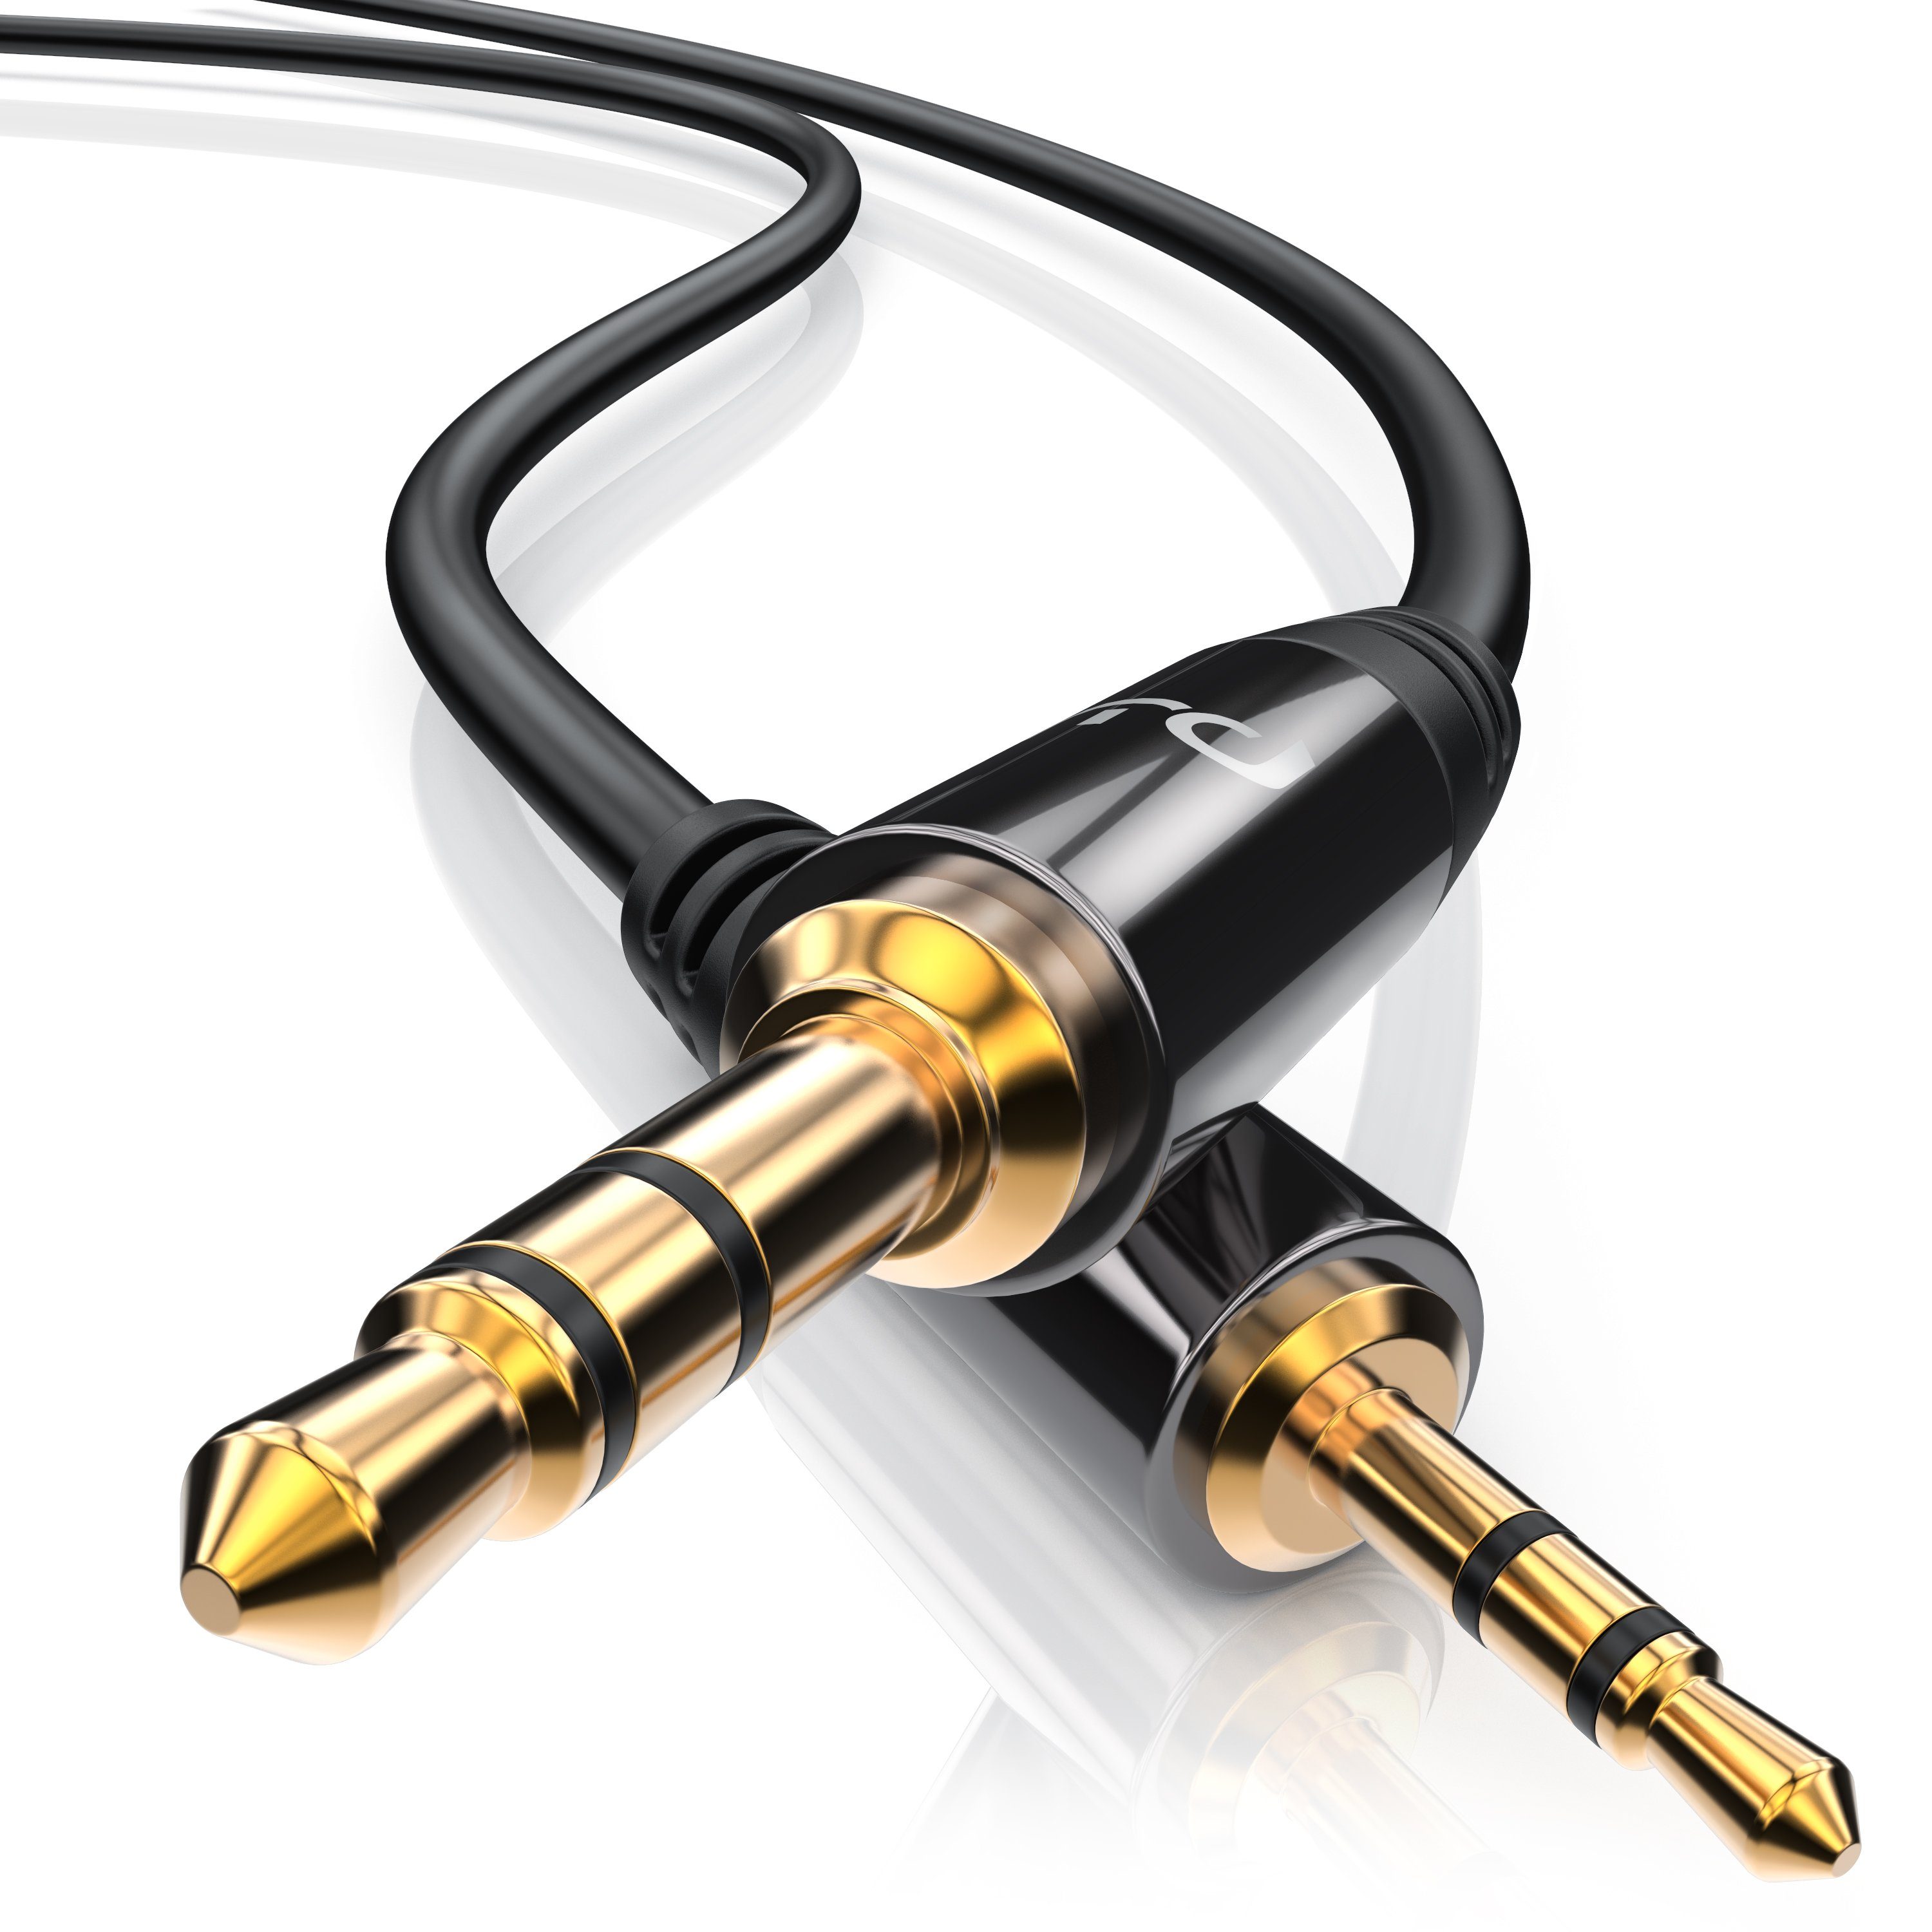 Rosegold Audiokabel kompatibel mit iPhone,Auto 3,5 mm Klinkenkabel CableCreation 3,5 mm Aux Stereo Kabel Priva III usw, Kopfhörern Stecker auf Stecker Tablets 3 ft / 0.9 M 